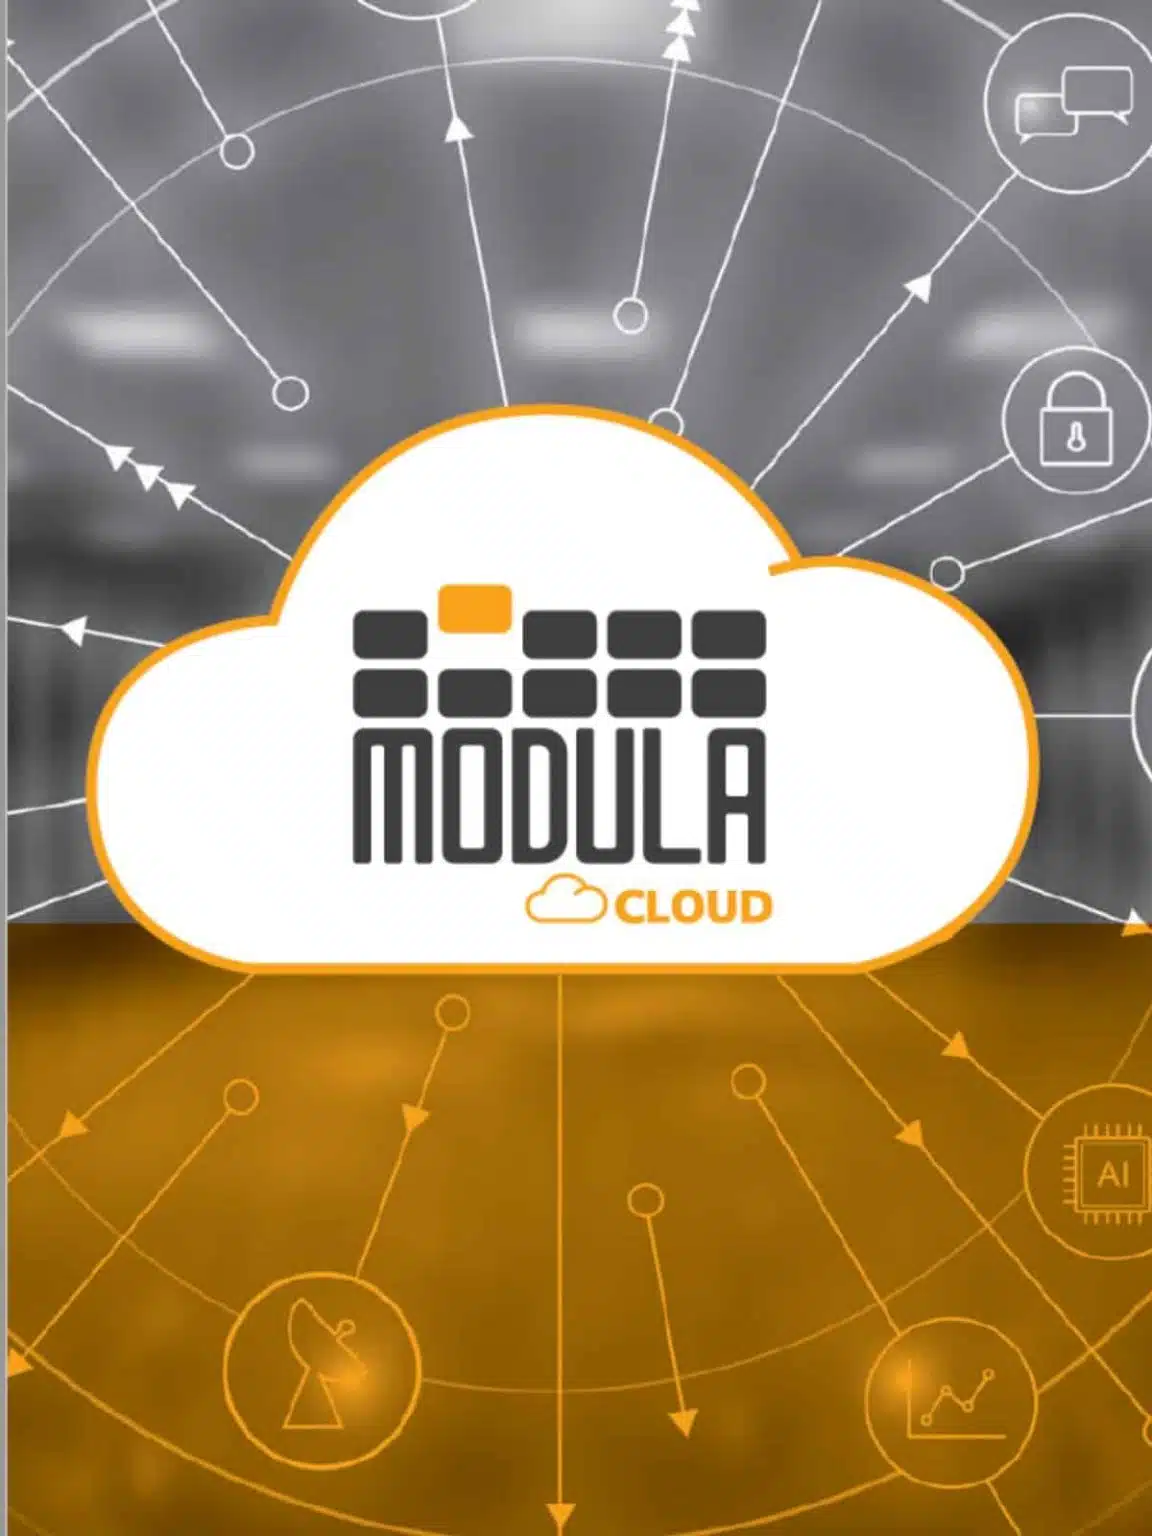 Modula Cloud Storage